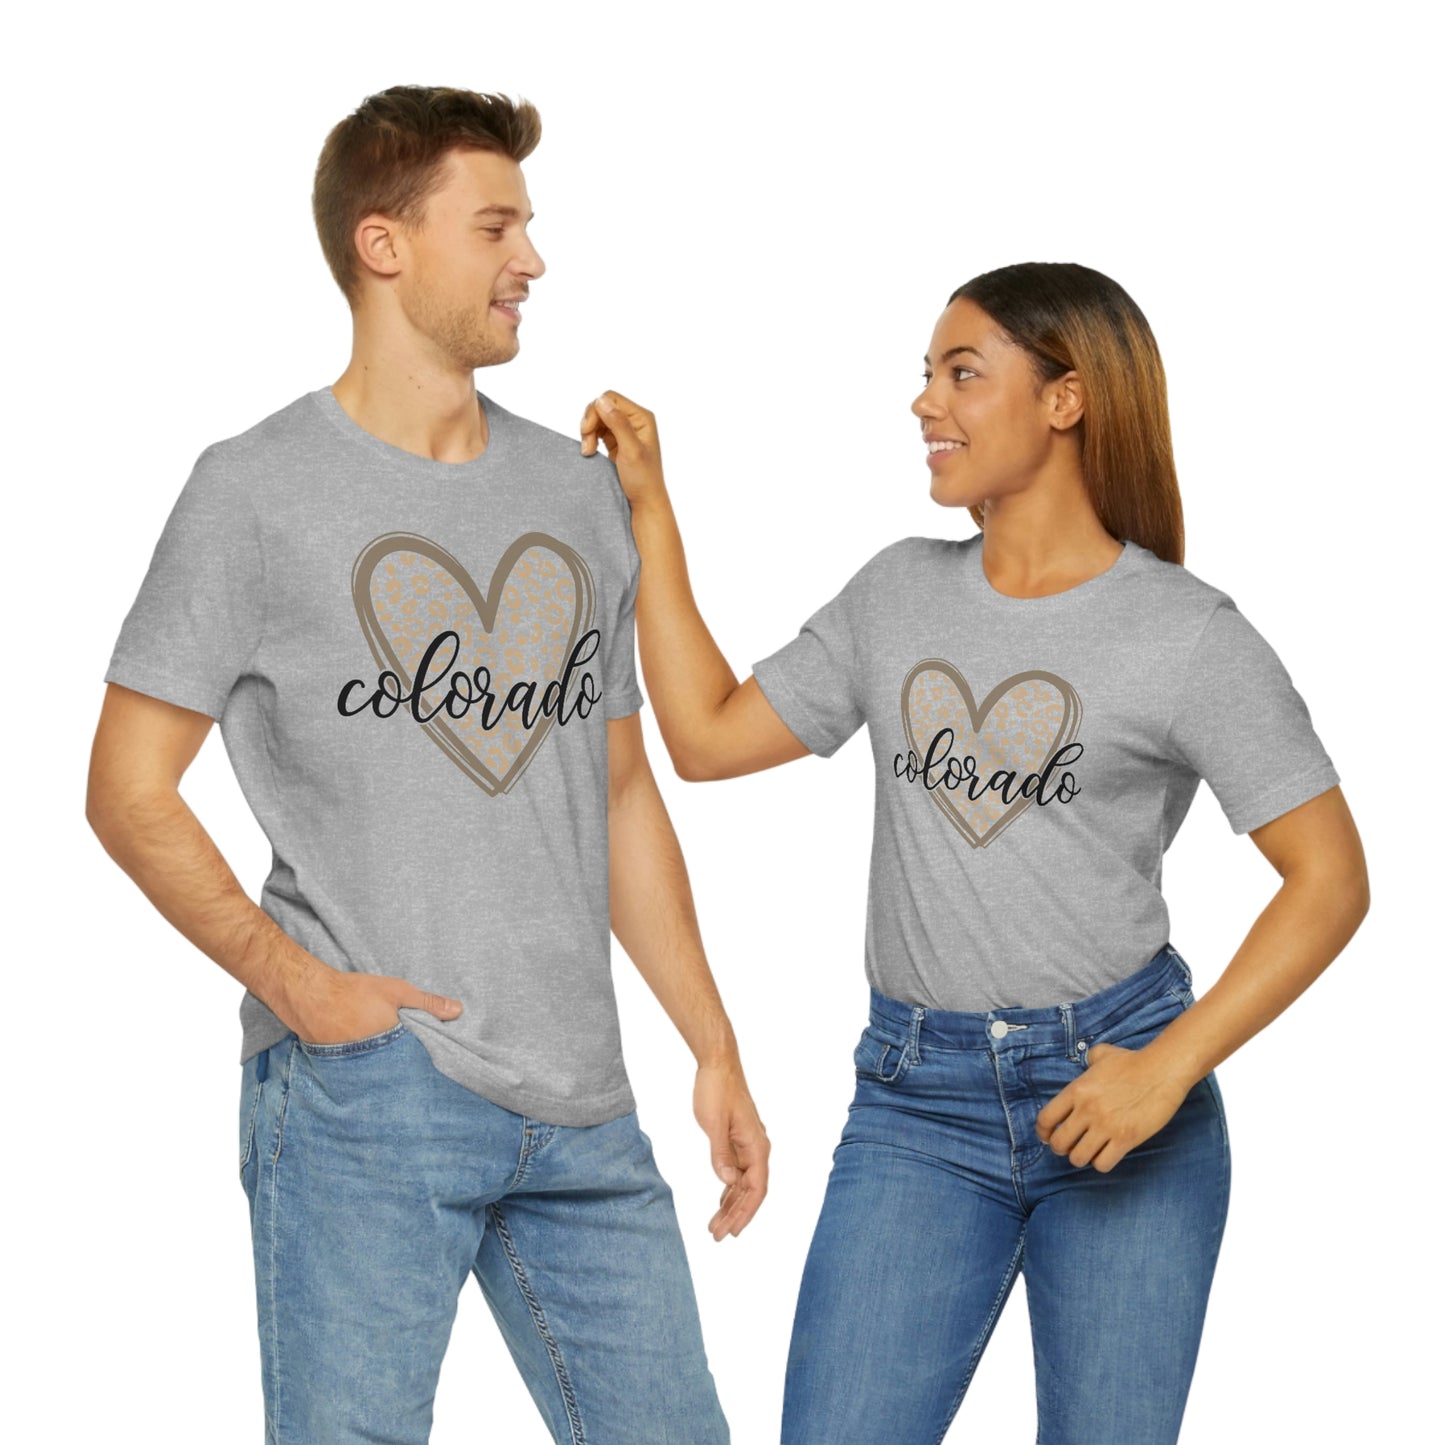 Colorado Heart Gold Leopard Print Unisex Jersey Short Sleeve Tee Tshirt T-shirt